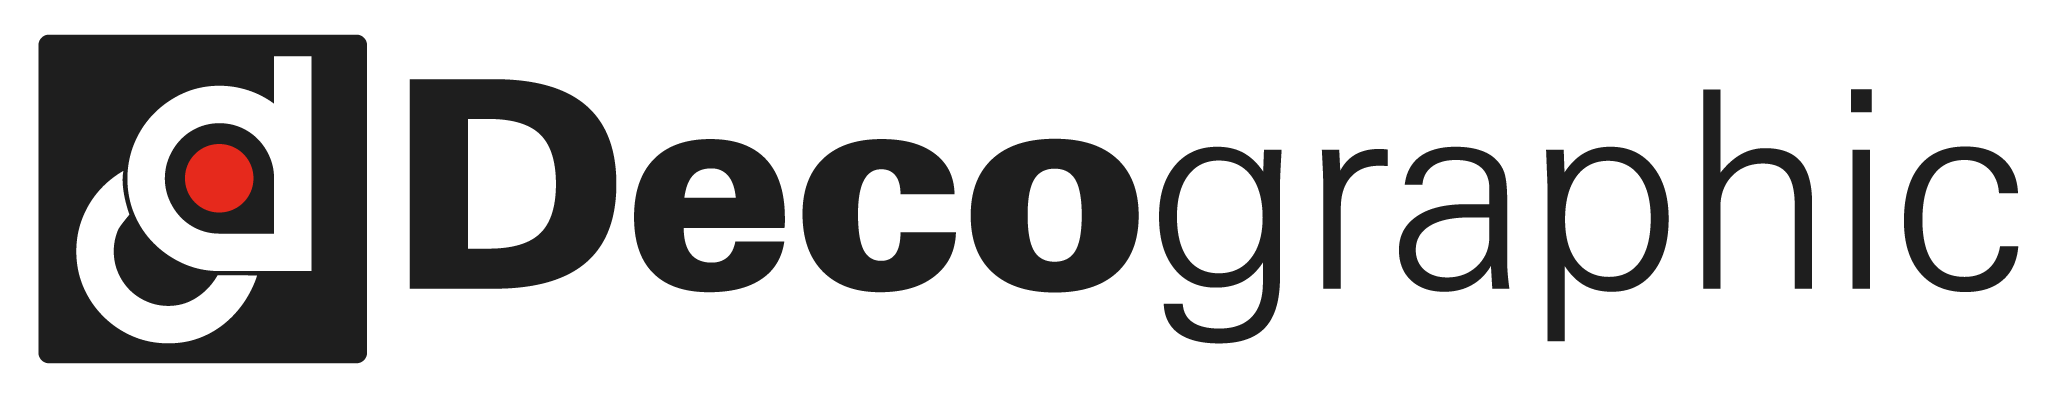 Decographic-Logo-2048-x-400